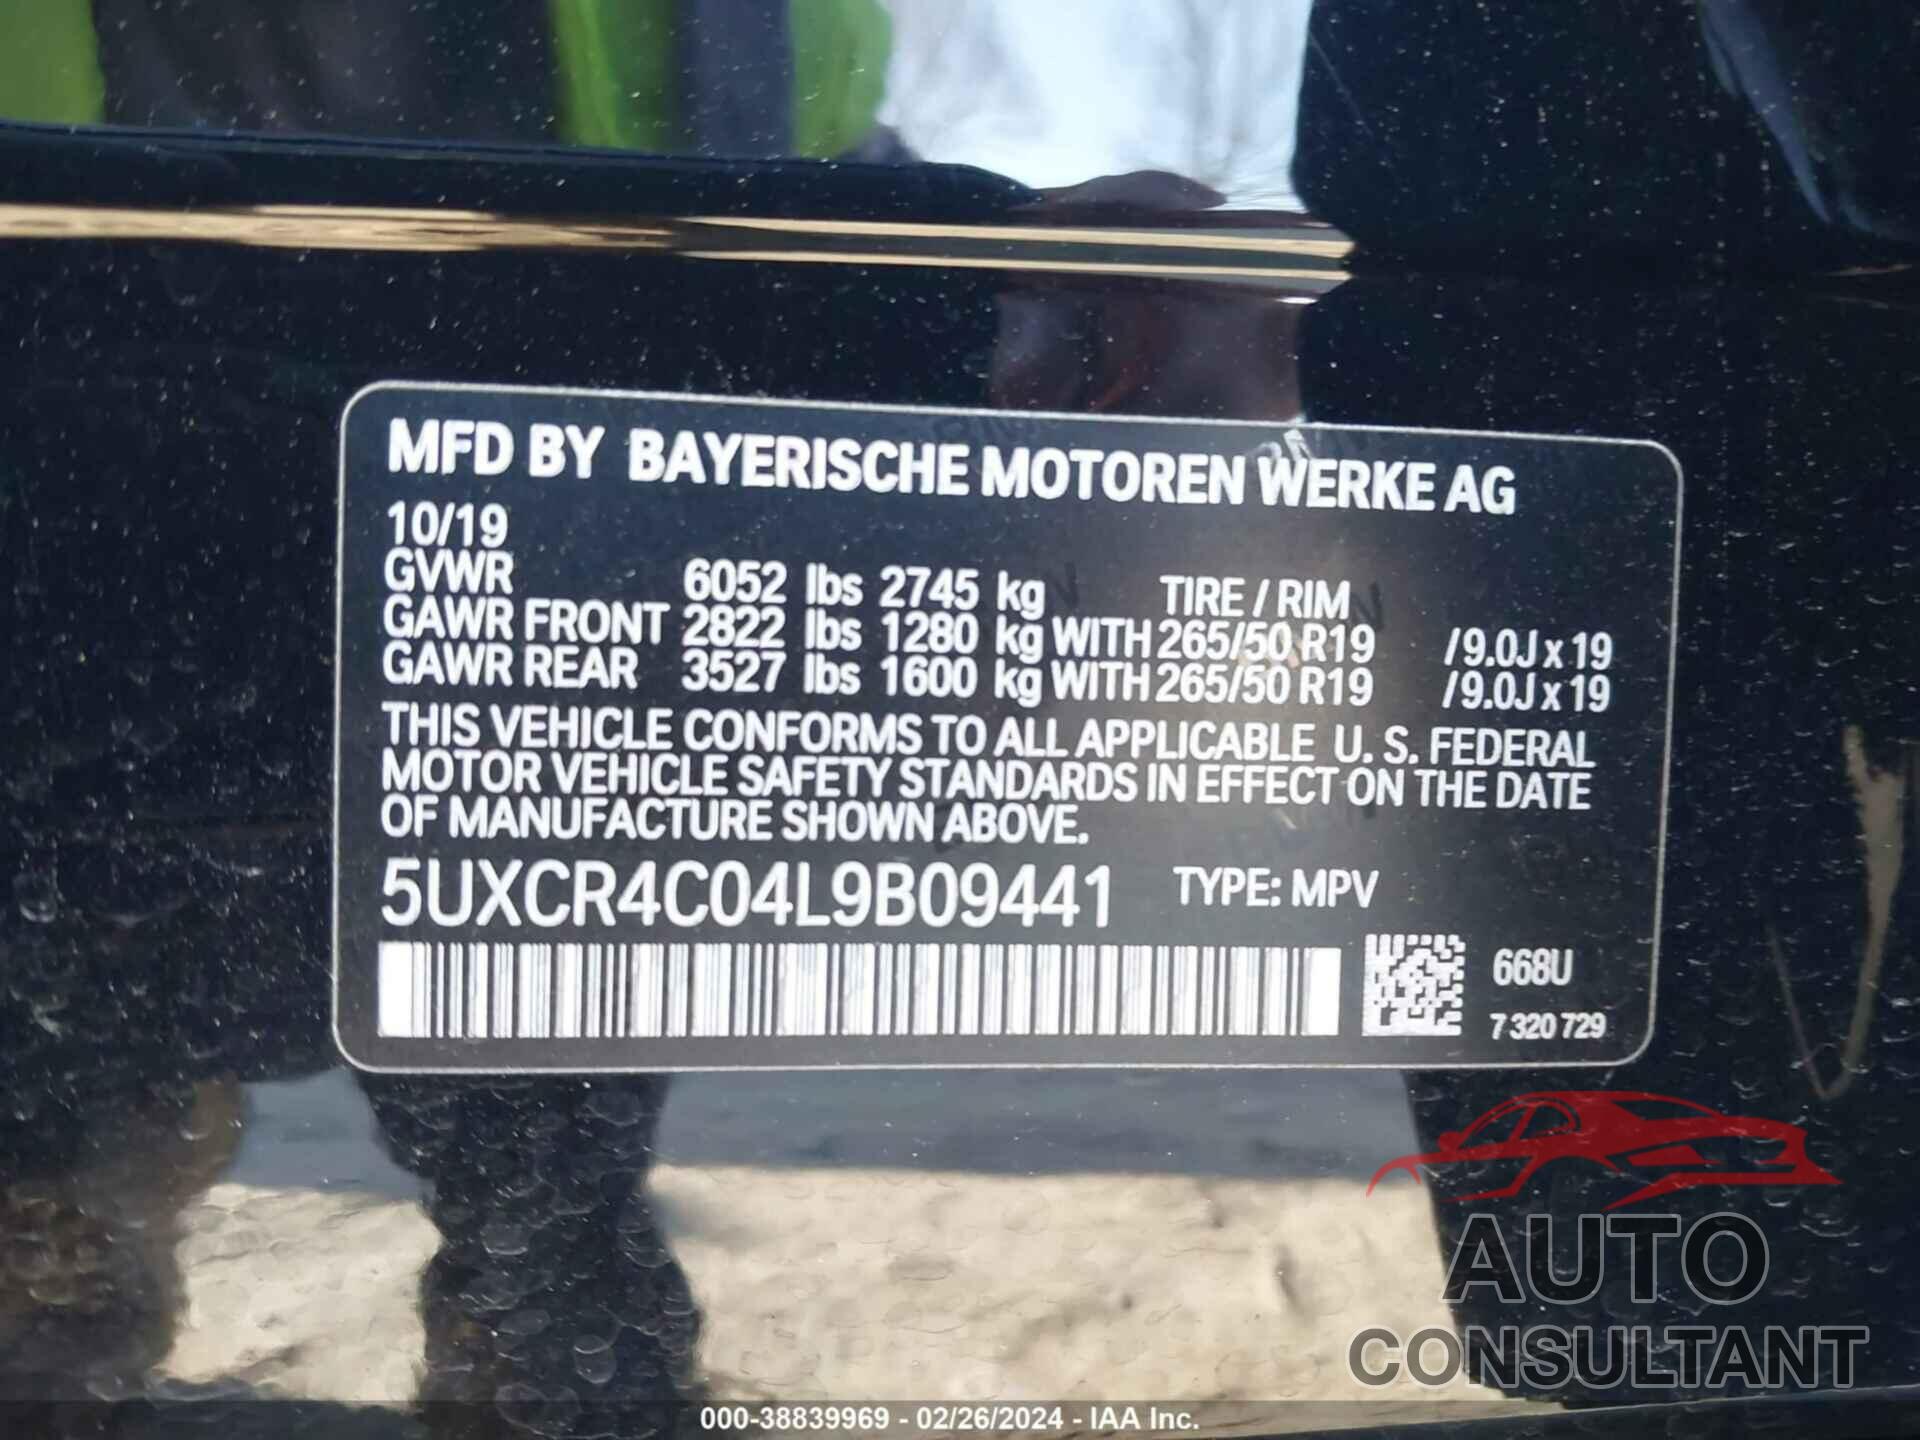 BMW X5 2020 - 5UXCR4C04L9B09441